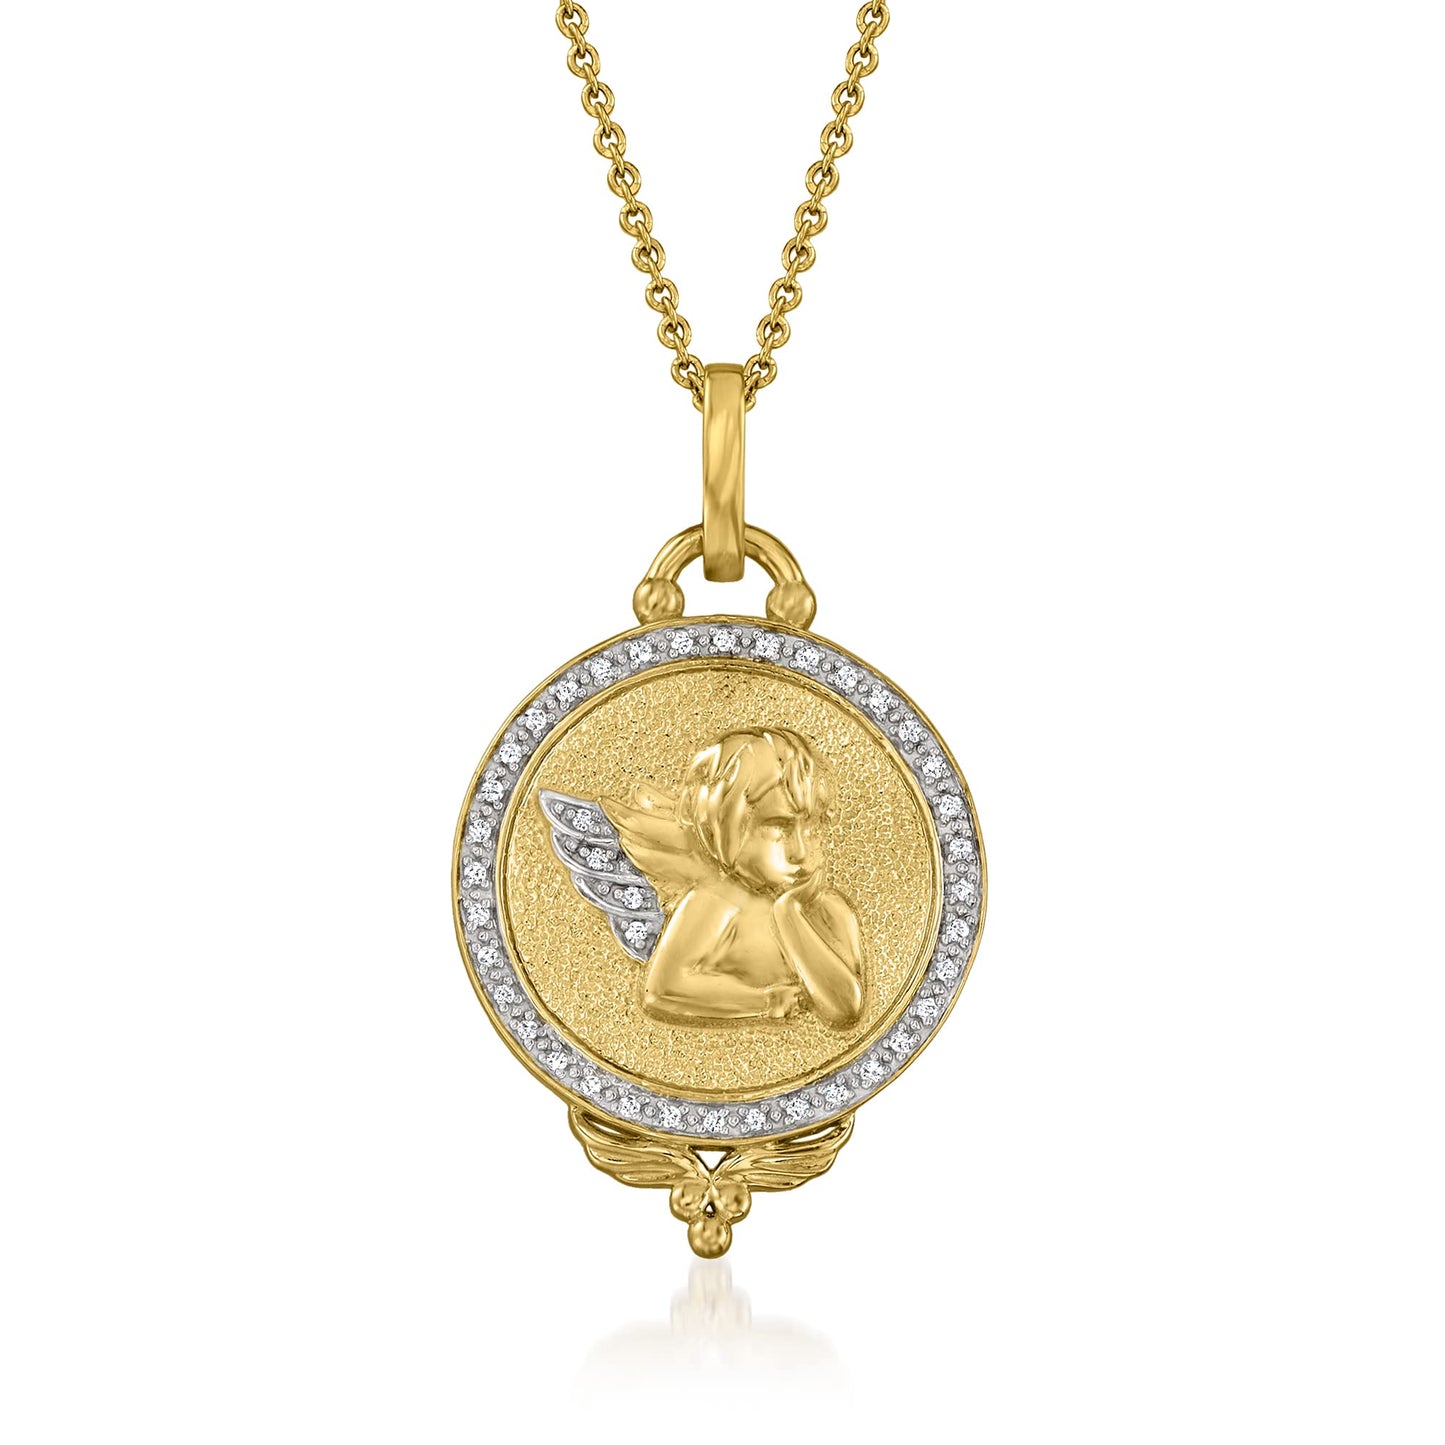 Diamond Angel Medallion Pendant Necklace in 18kt Gold Over Sterling